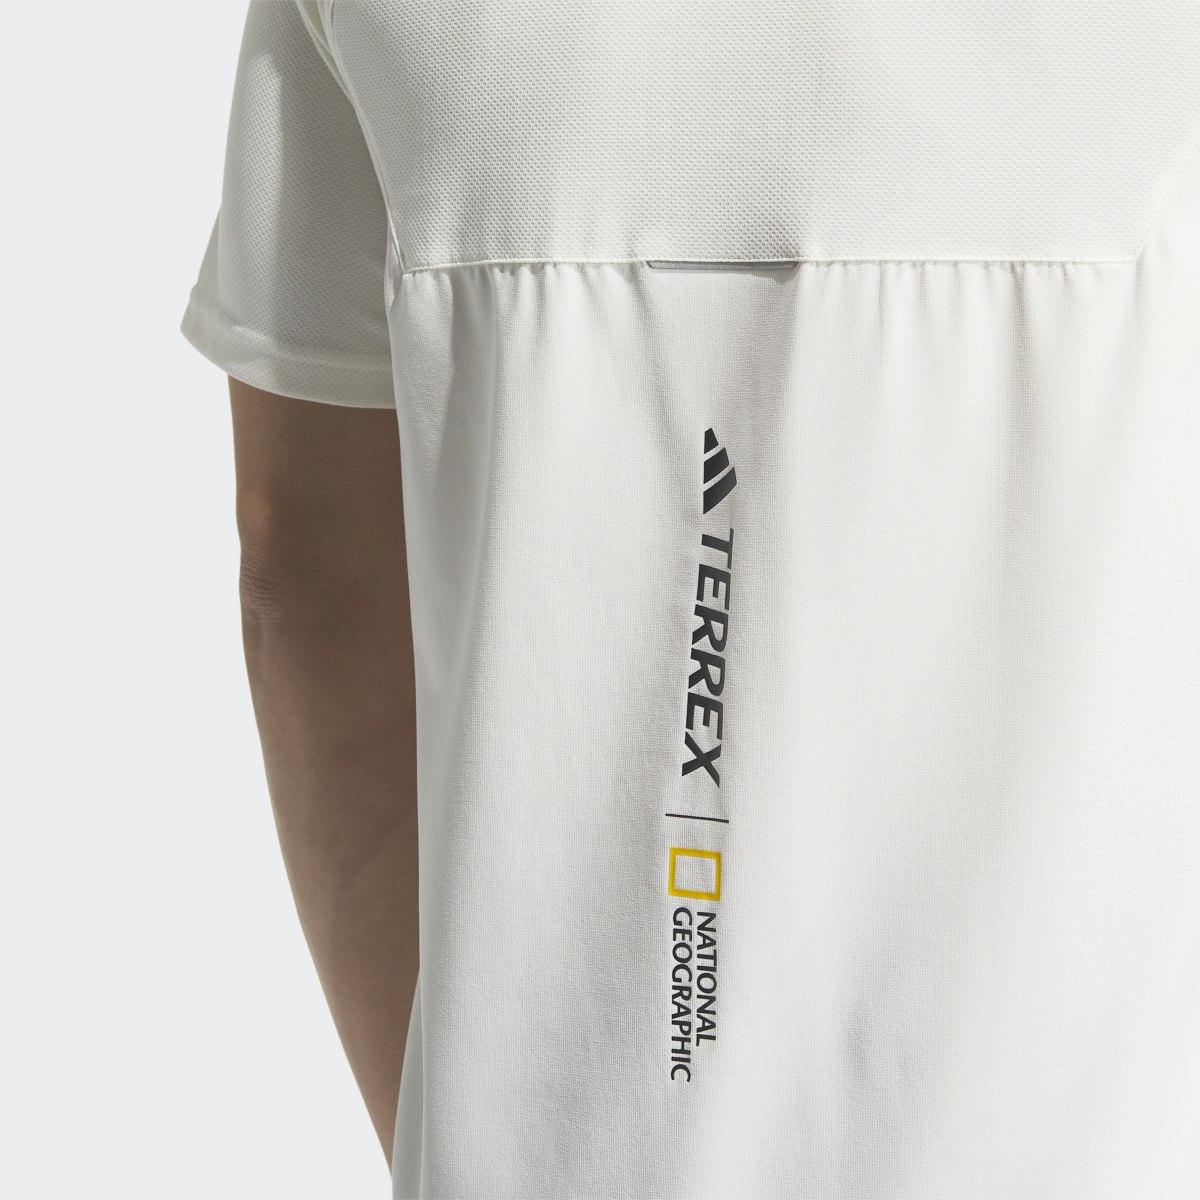 Adidas National Geographic T-Shirt. 8